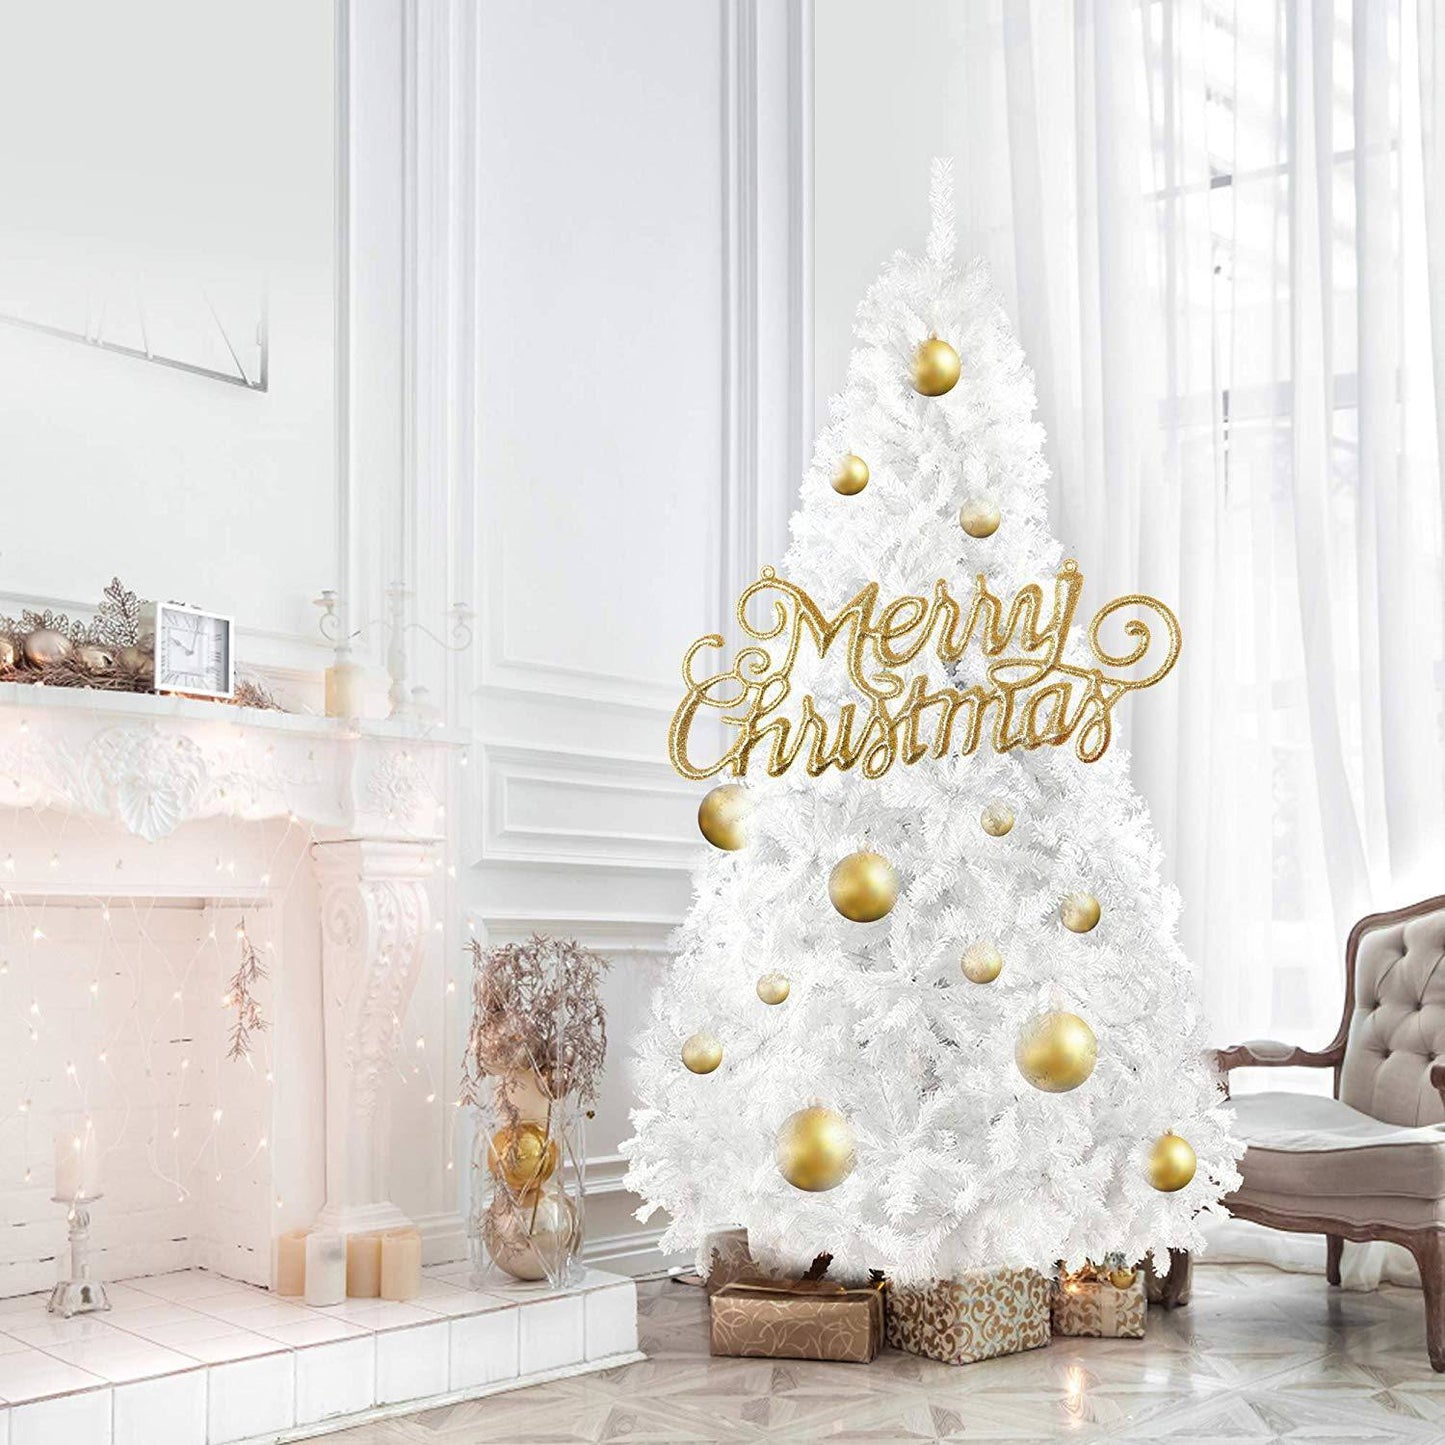 8 Ft High Christmas Tree 1500 Tips Decorate Pine Tree W/ Metal Legs;  White